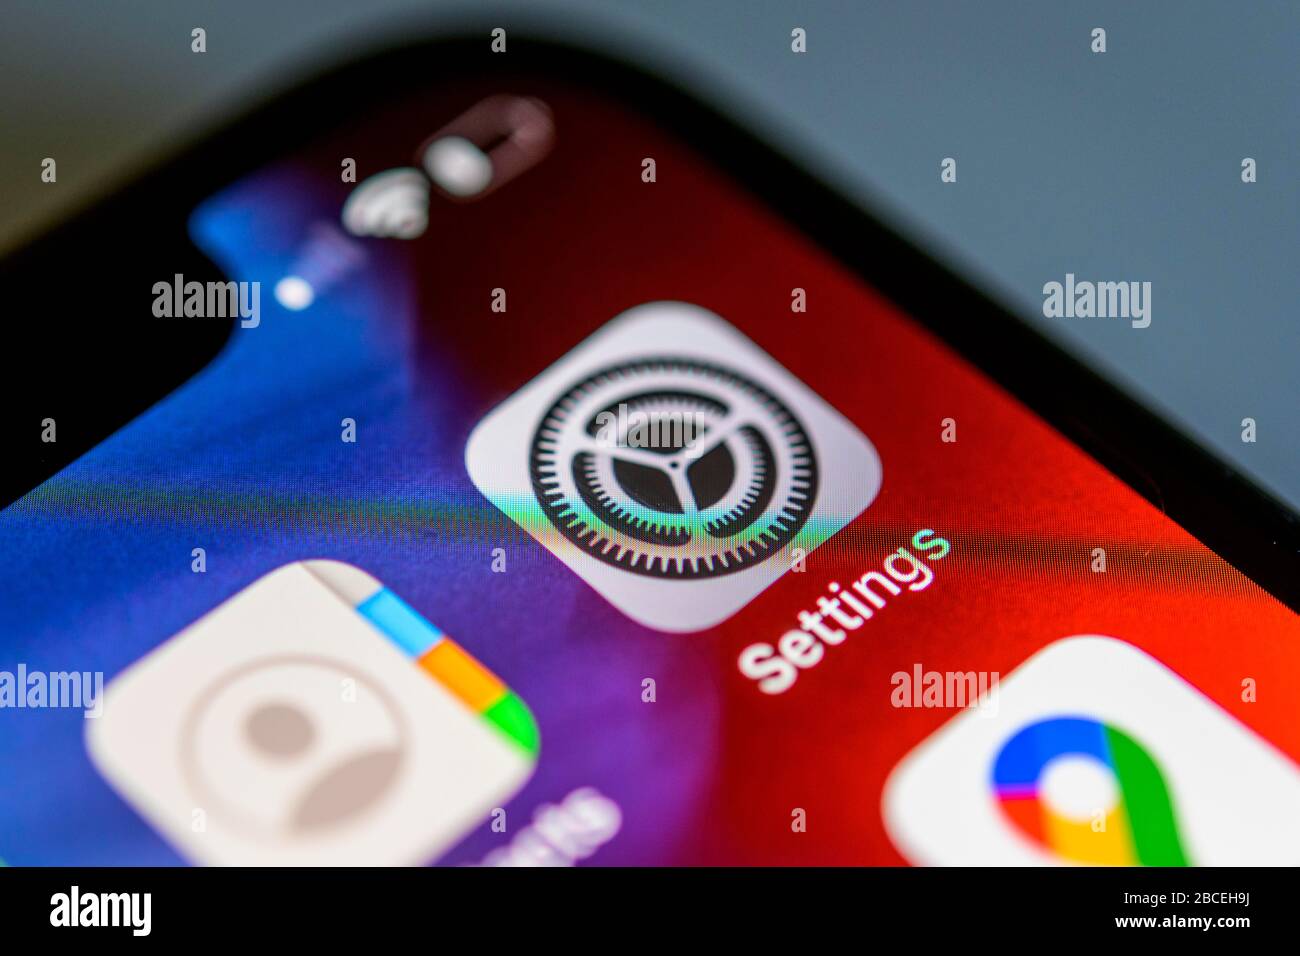 Apple Settings App, Icon, Logo, Display, Screen, iPhone, App, Mobile, Smartphone, iOS, Detail, full screen Stock Photo